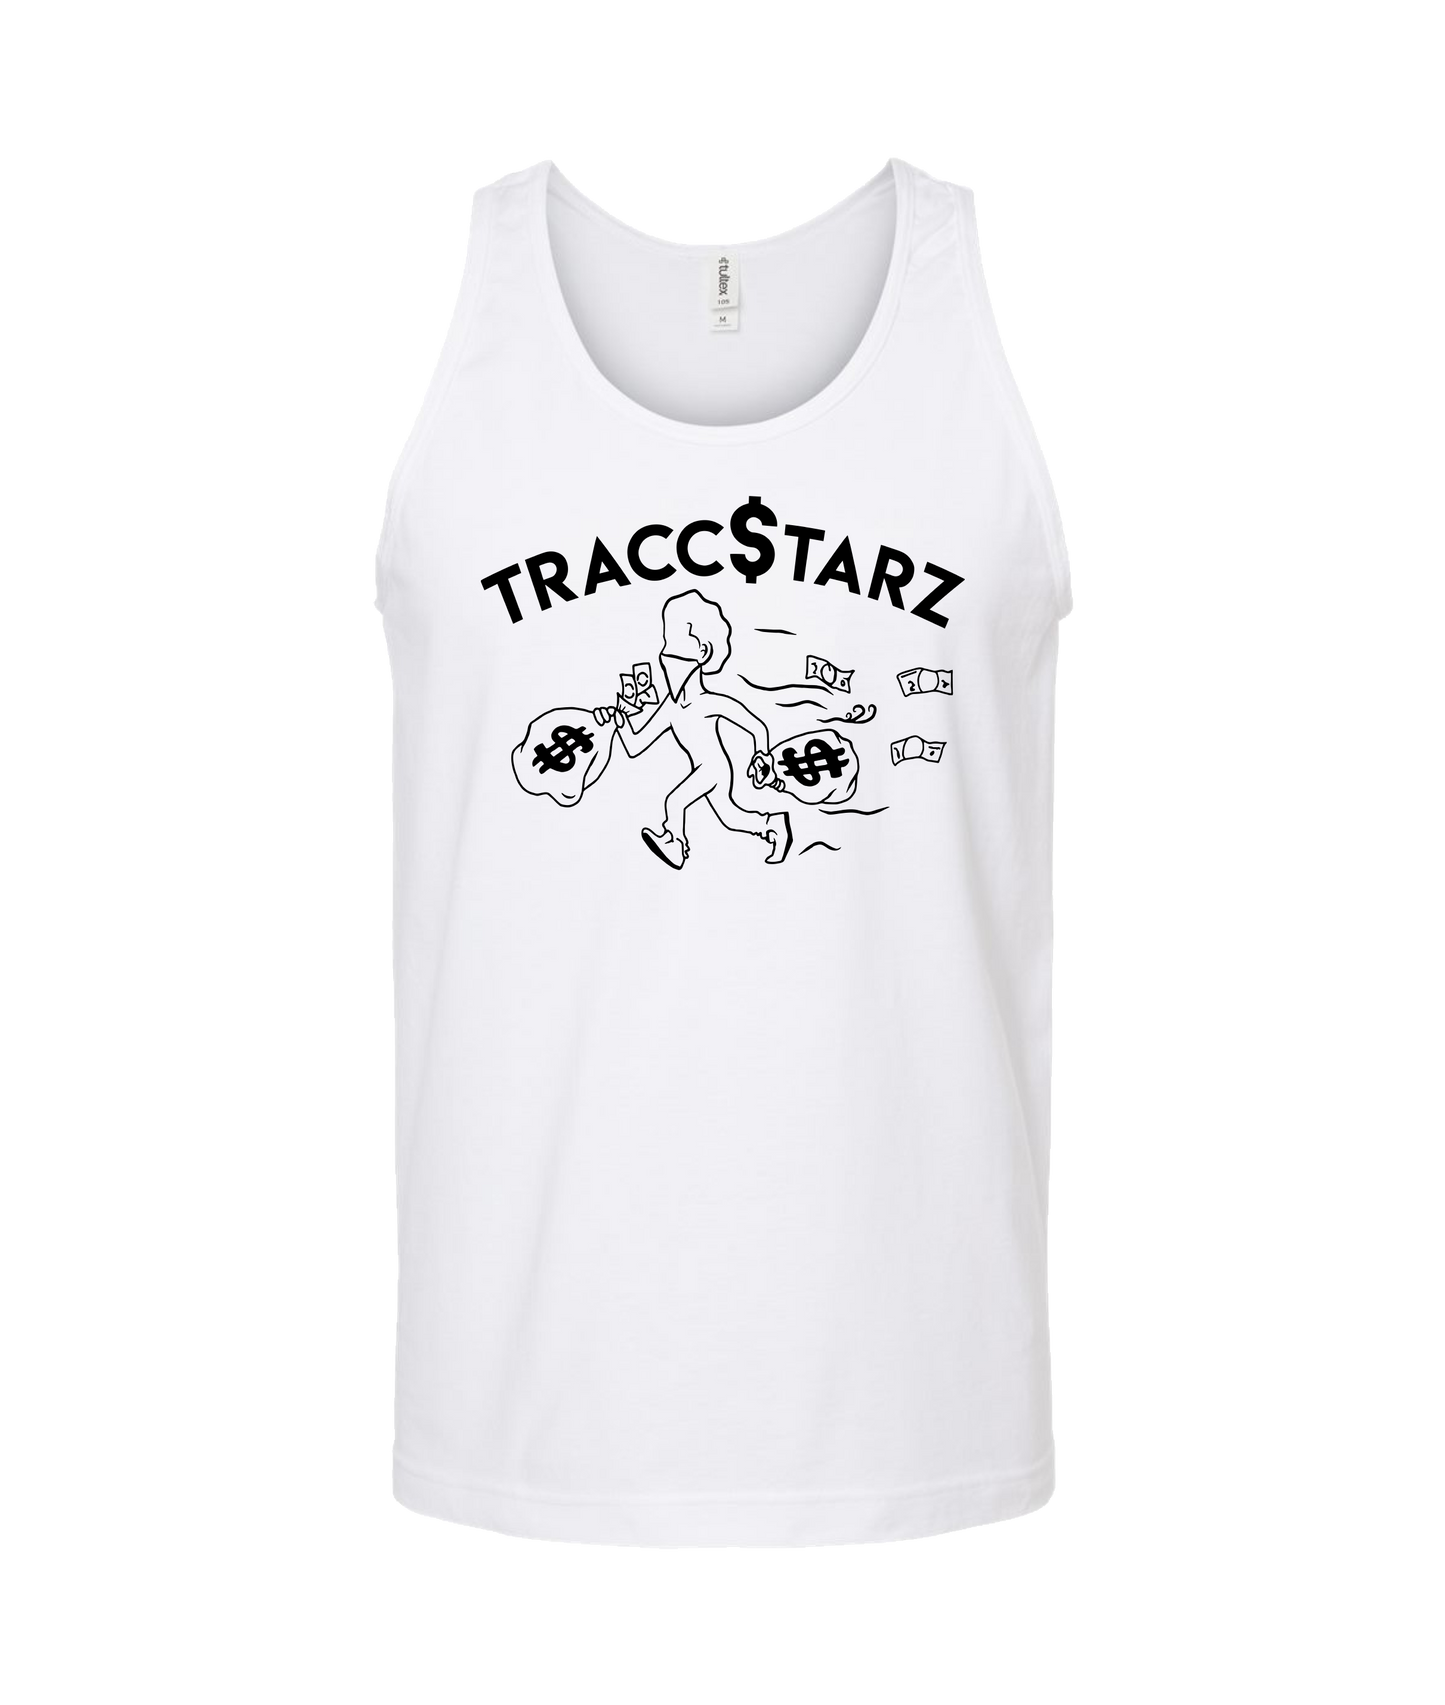 TraccStarz - Runnin - White Tank Top